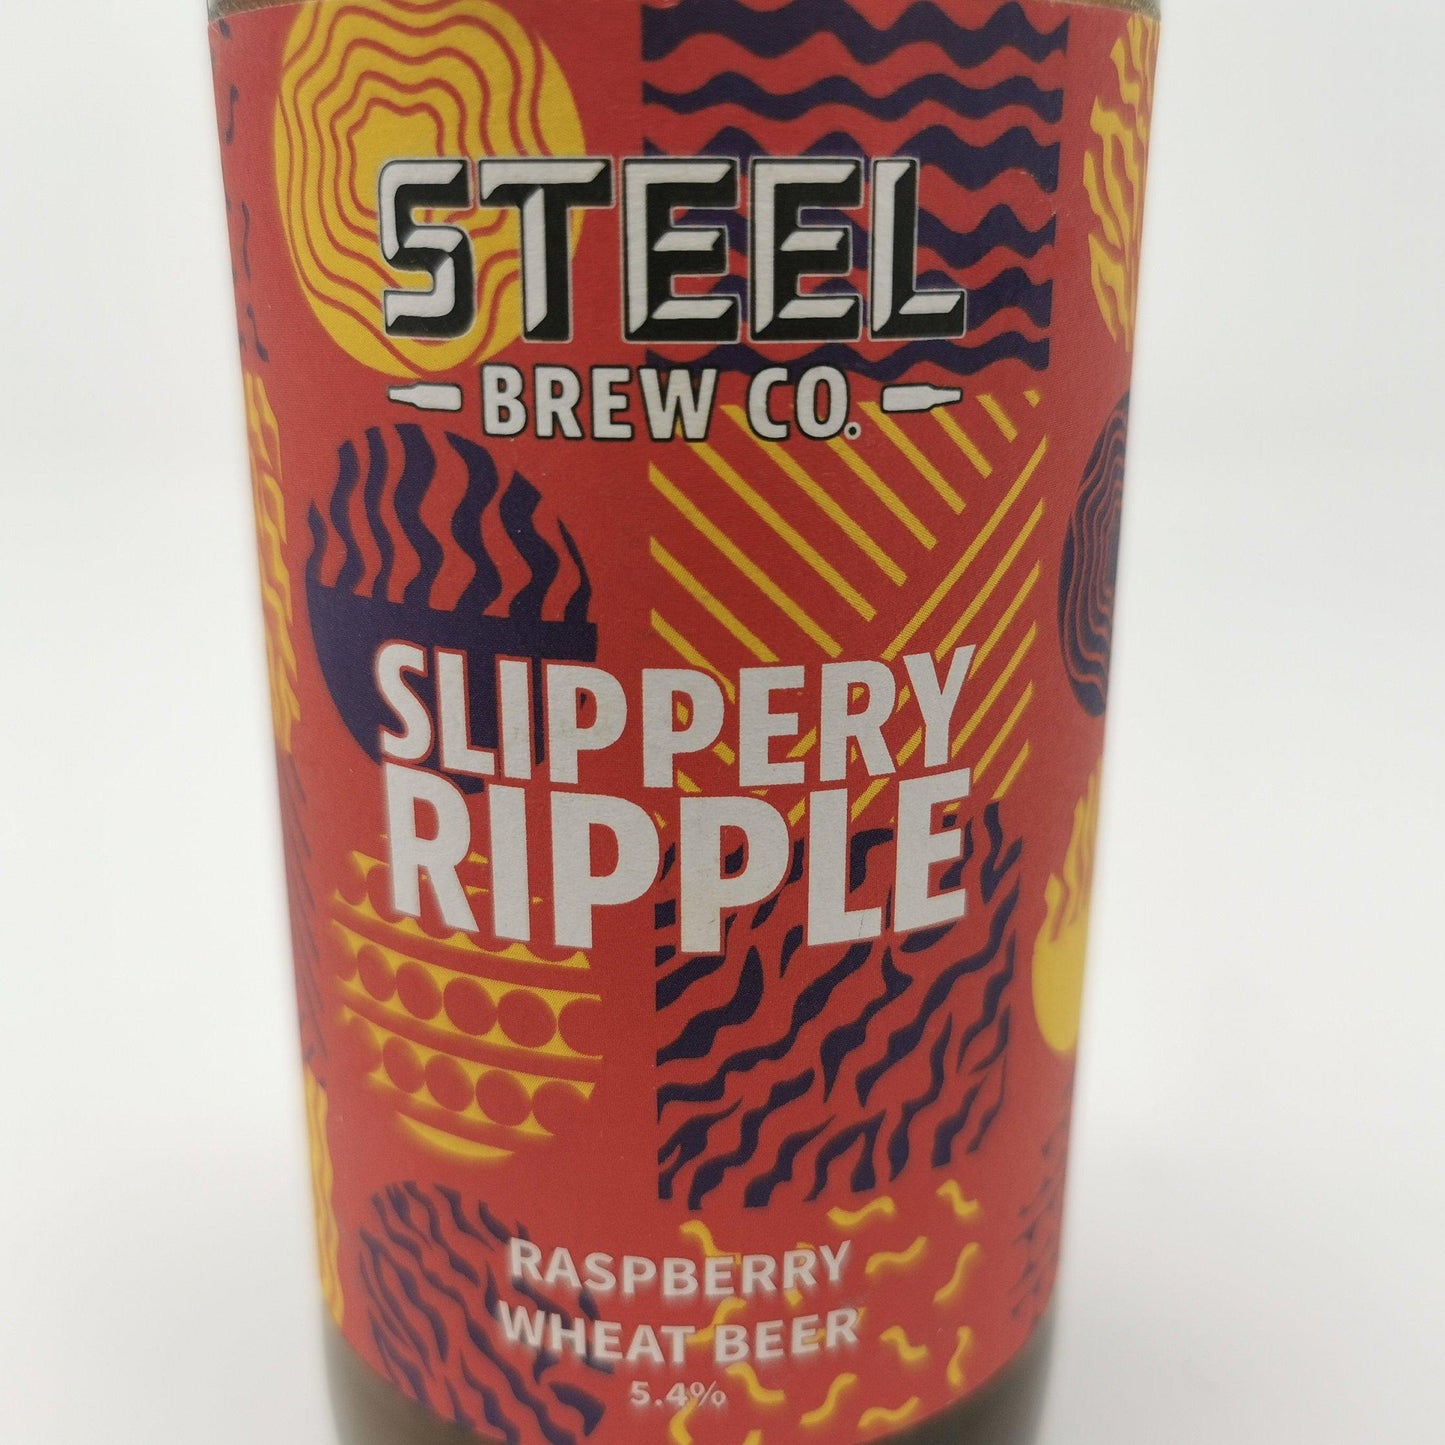 Steel Brew Slippery Ripple Craft Beer Bottle Candle Beer & Ale Bottle Candles Adhock Homeware